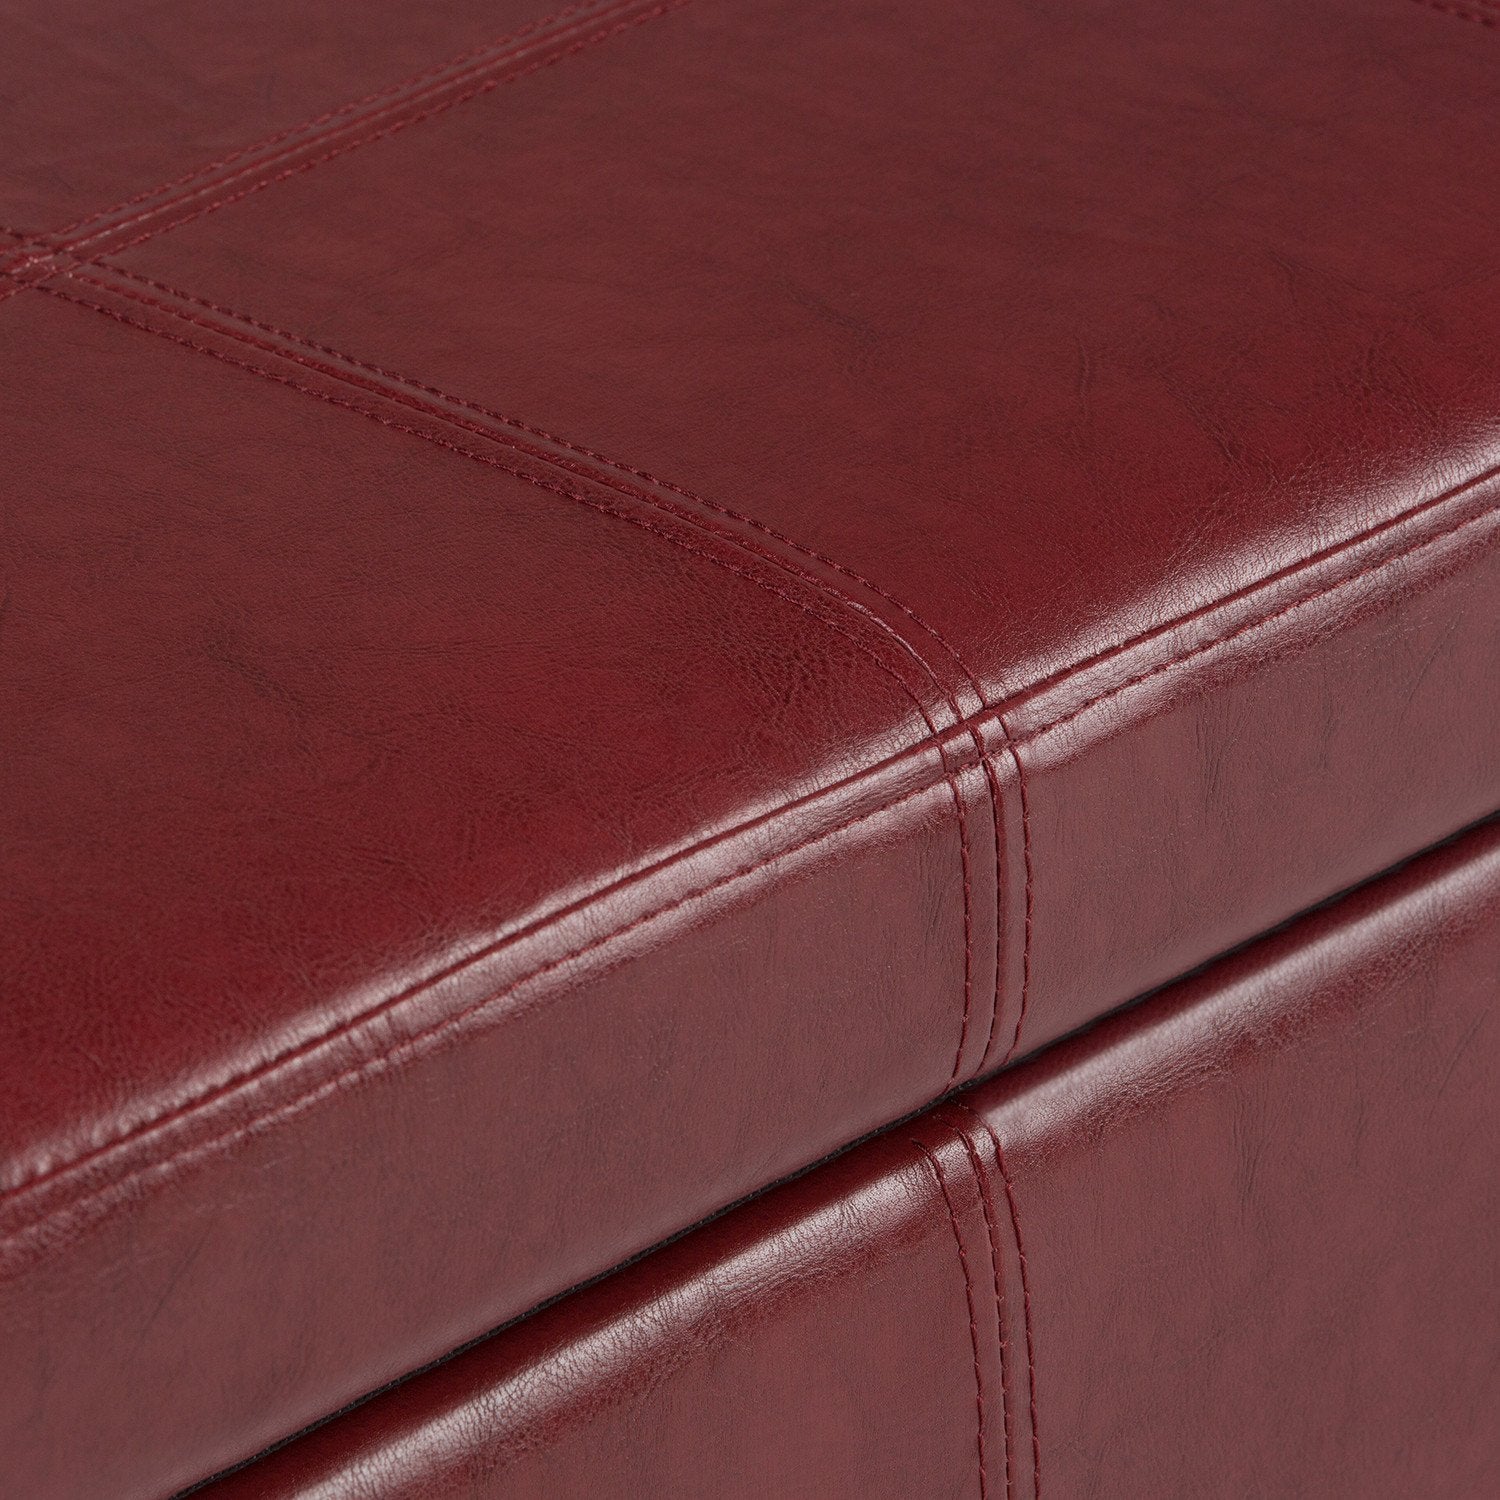 Radicchio Red Vegan Leather | Kingsley Bonded Leather Storage Ottoman